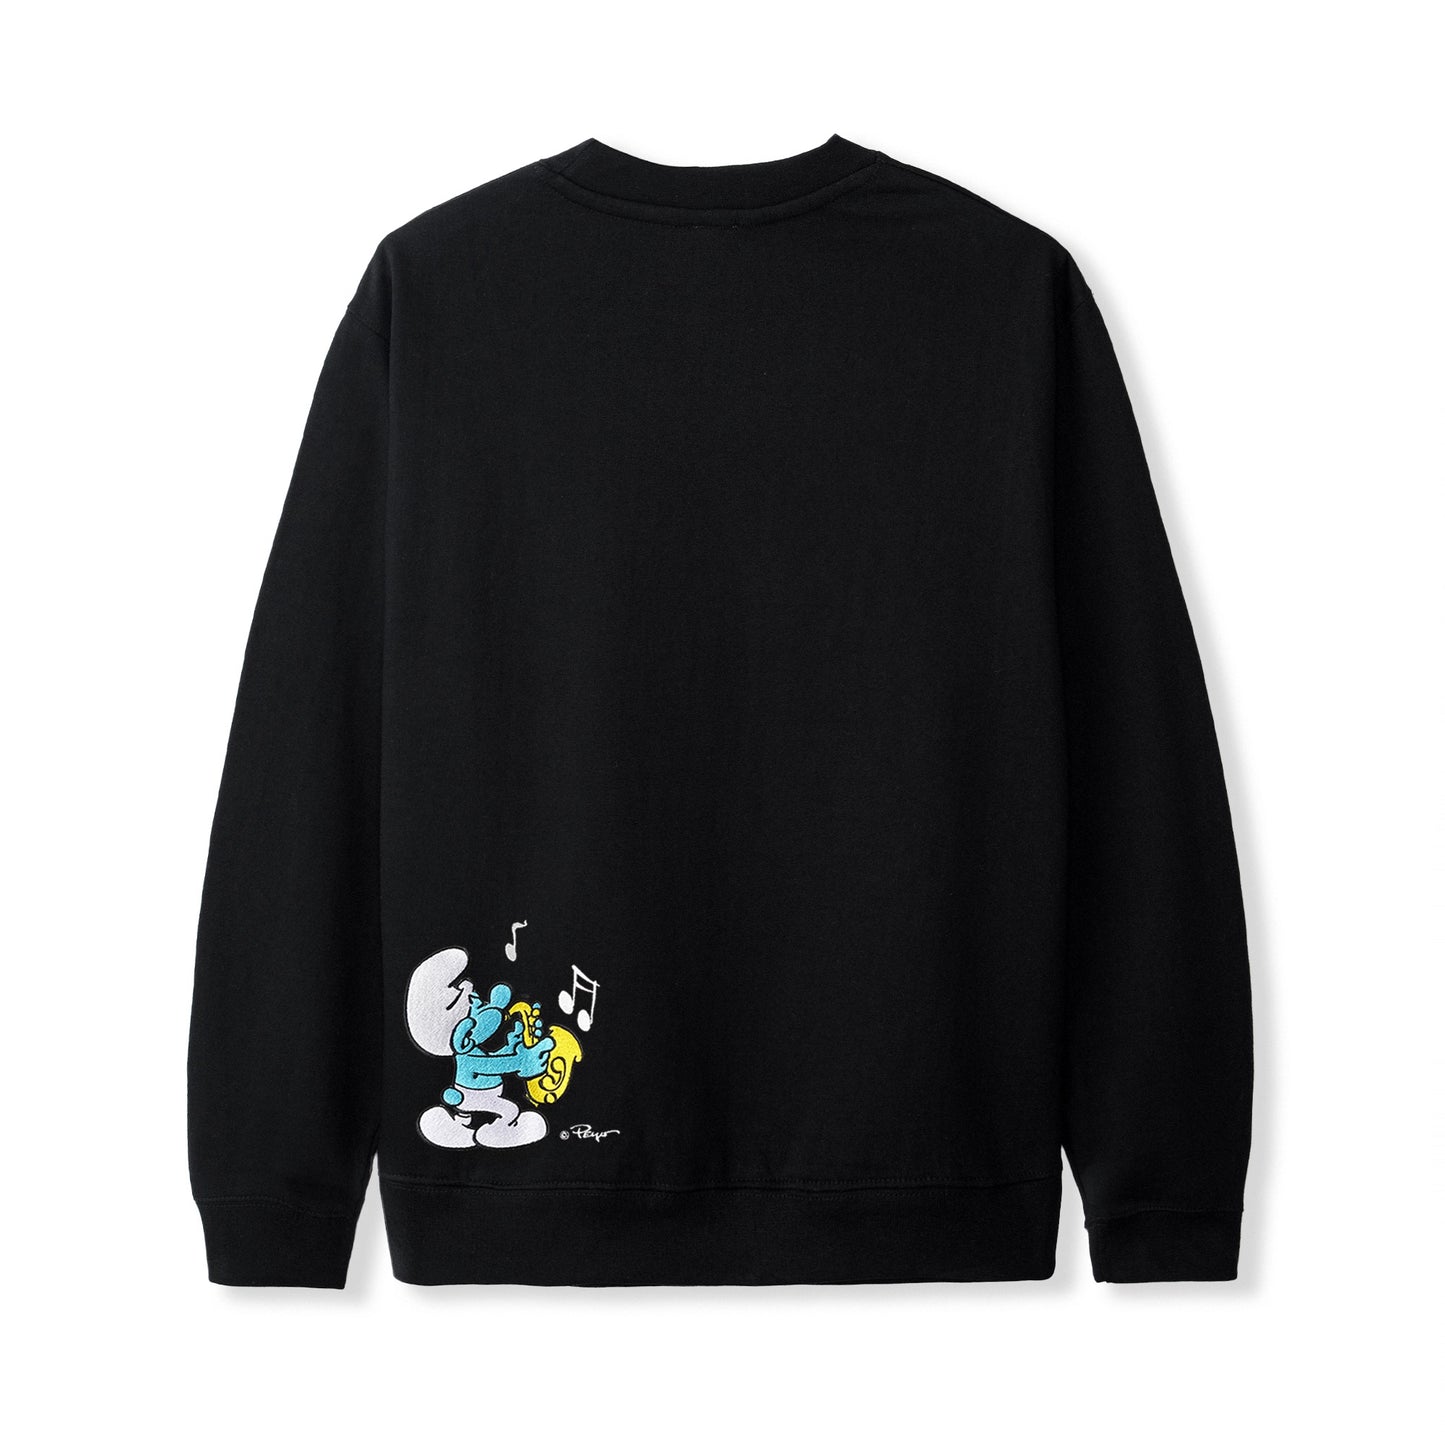 Butter Goods x The Smurfs™ Harmony Crewneck Sweatshirt Black